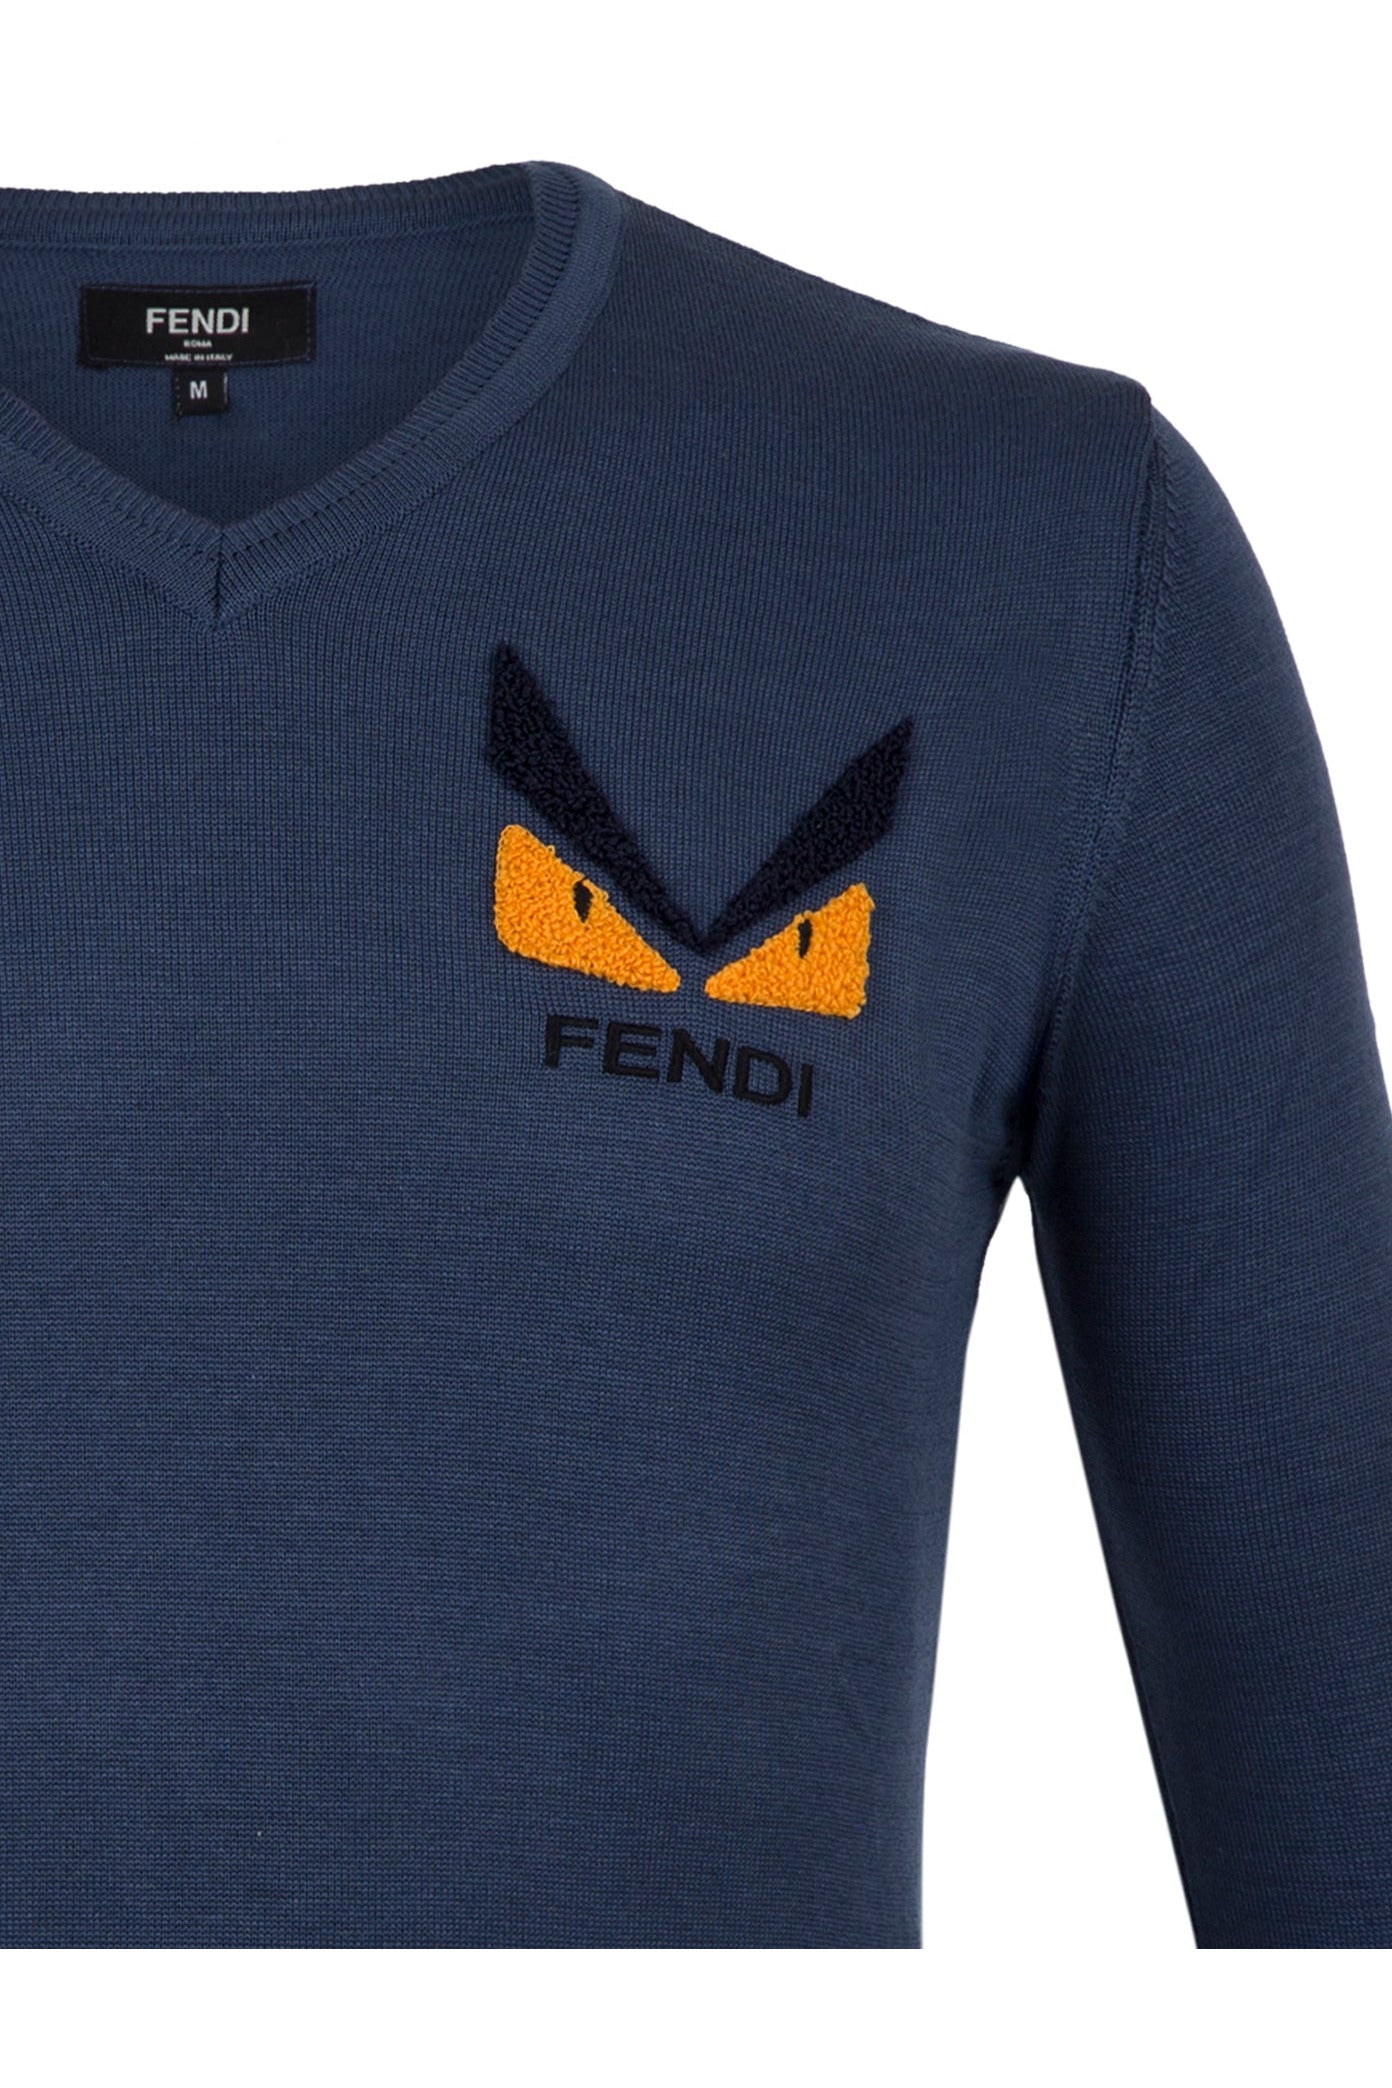 Fendi Blue Men Jumper Sweater Cardigan Material Cotton